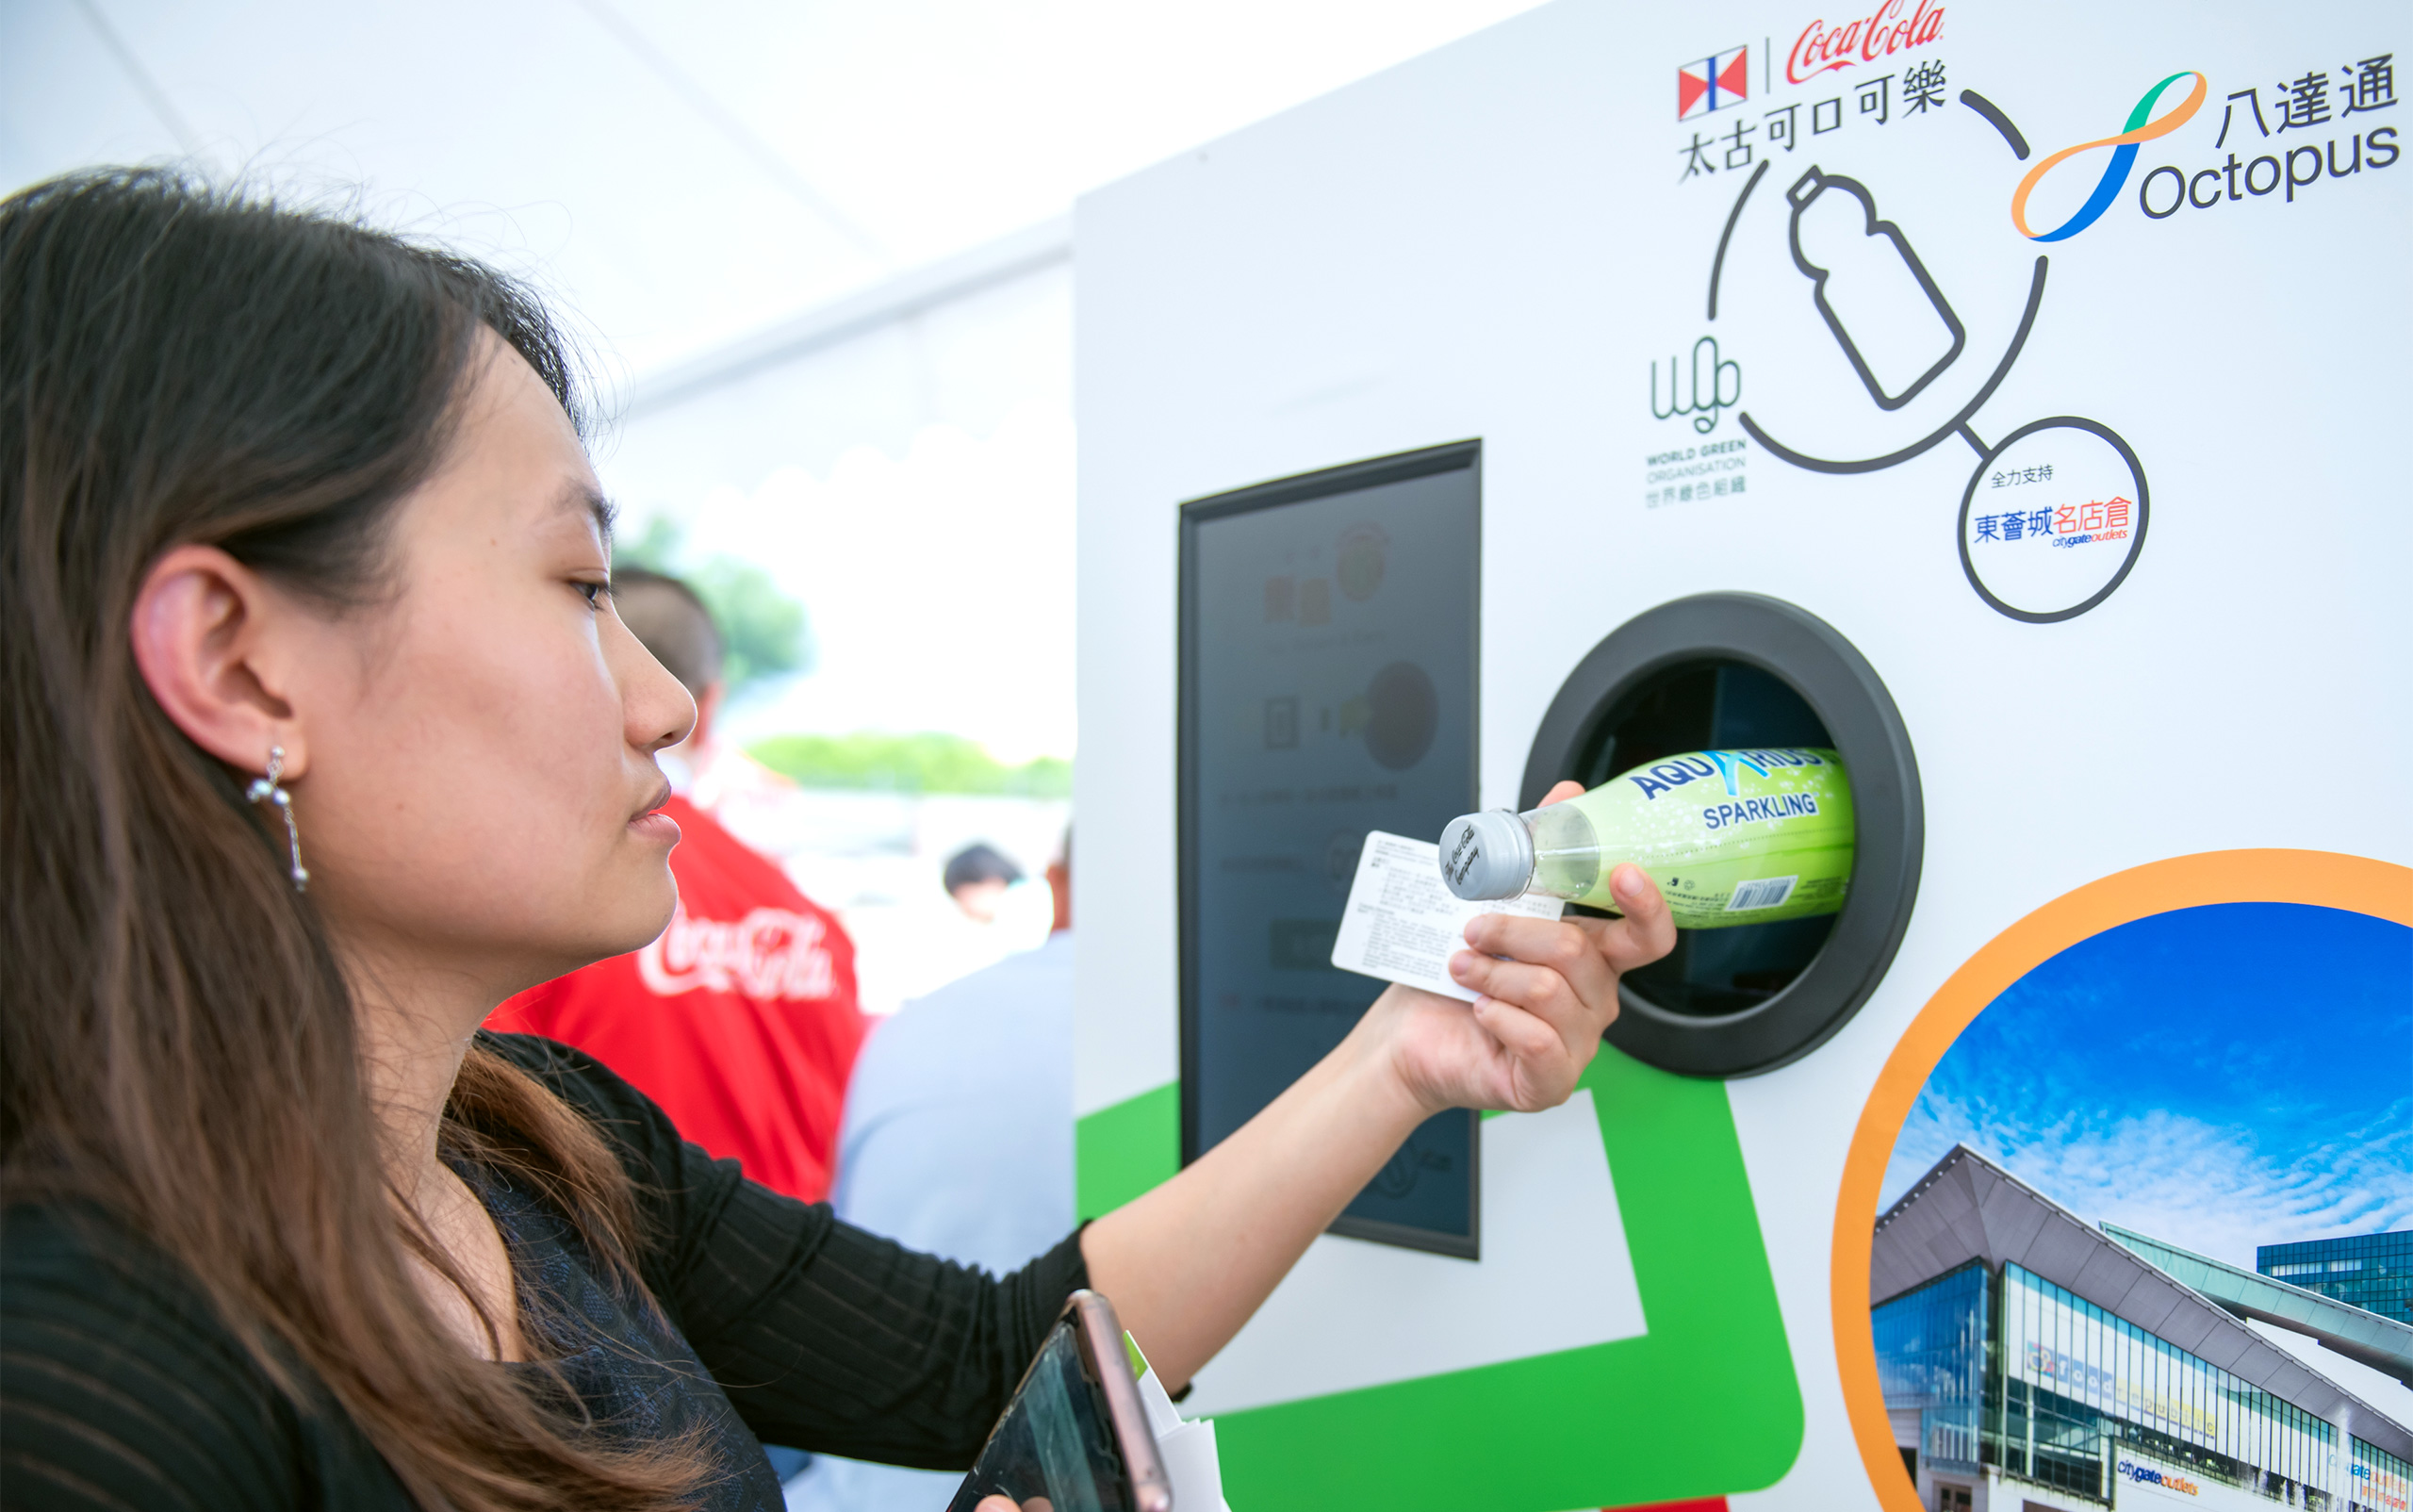 Swire Coca-Cola - new recycling initiatives